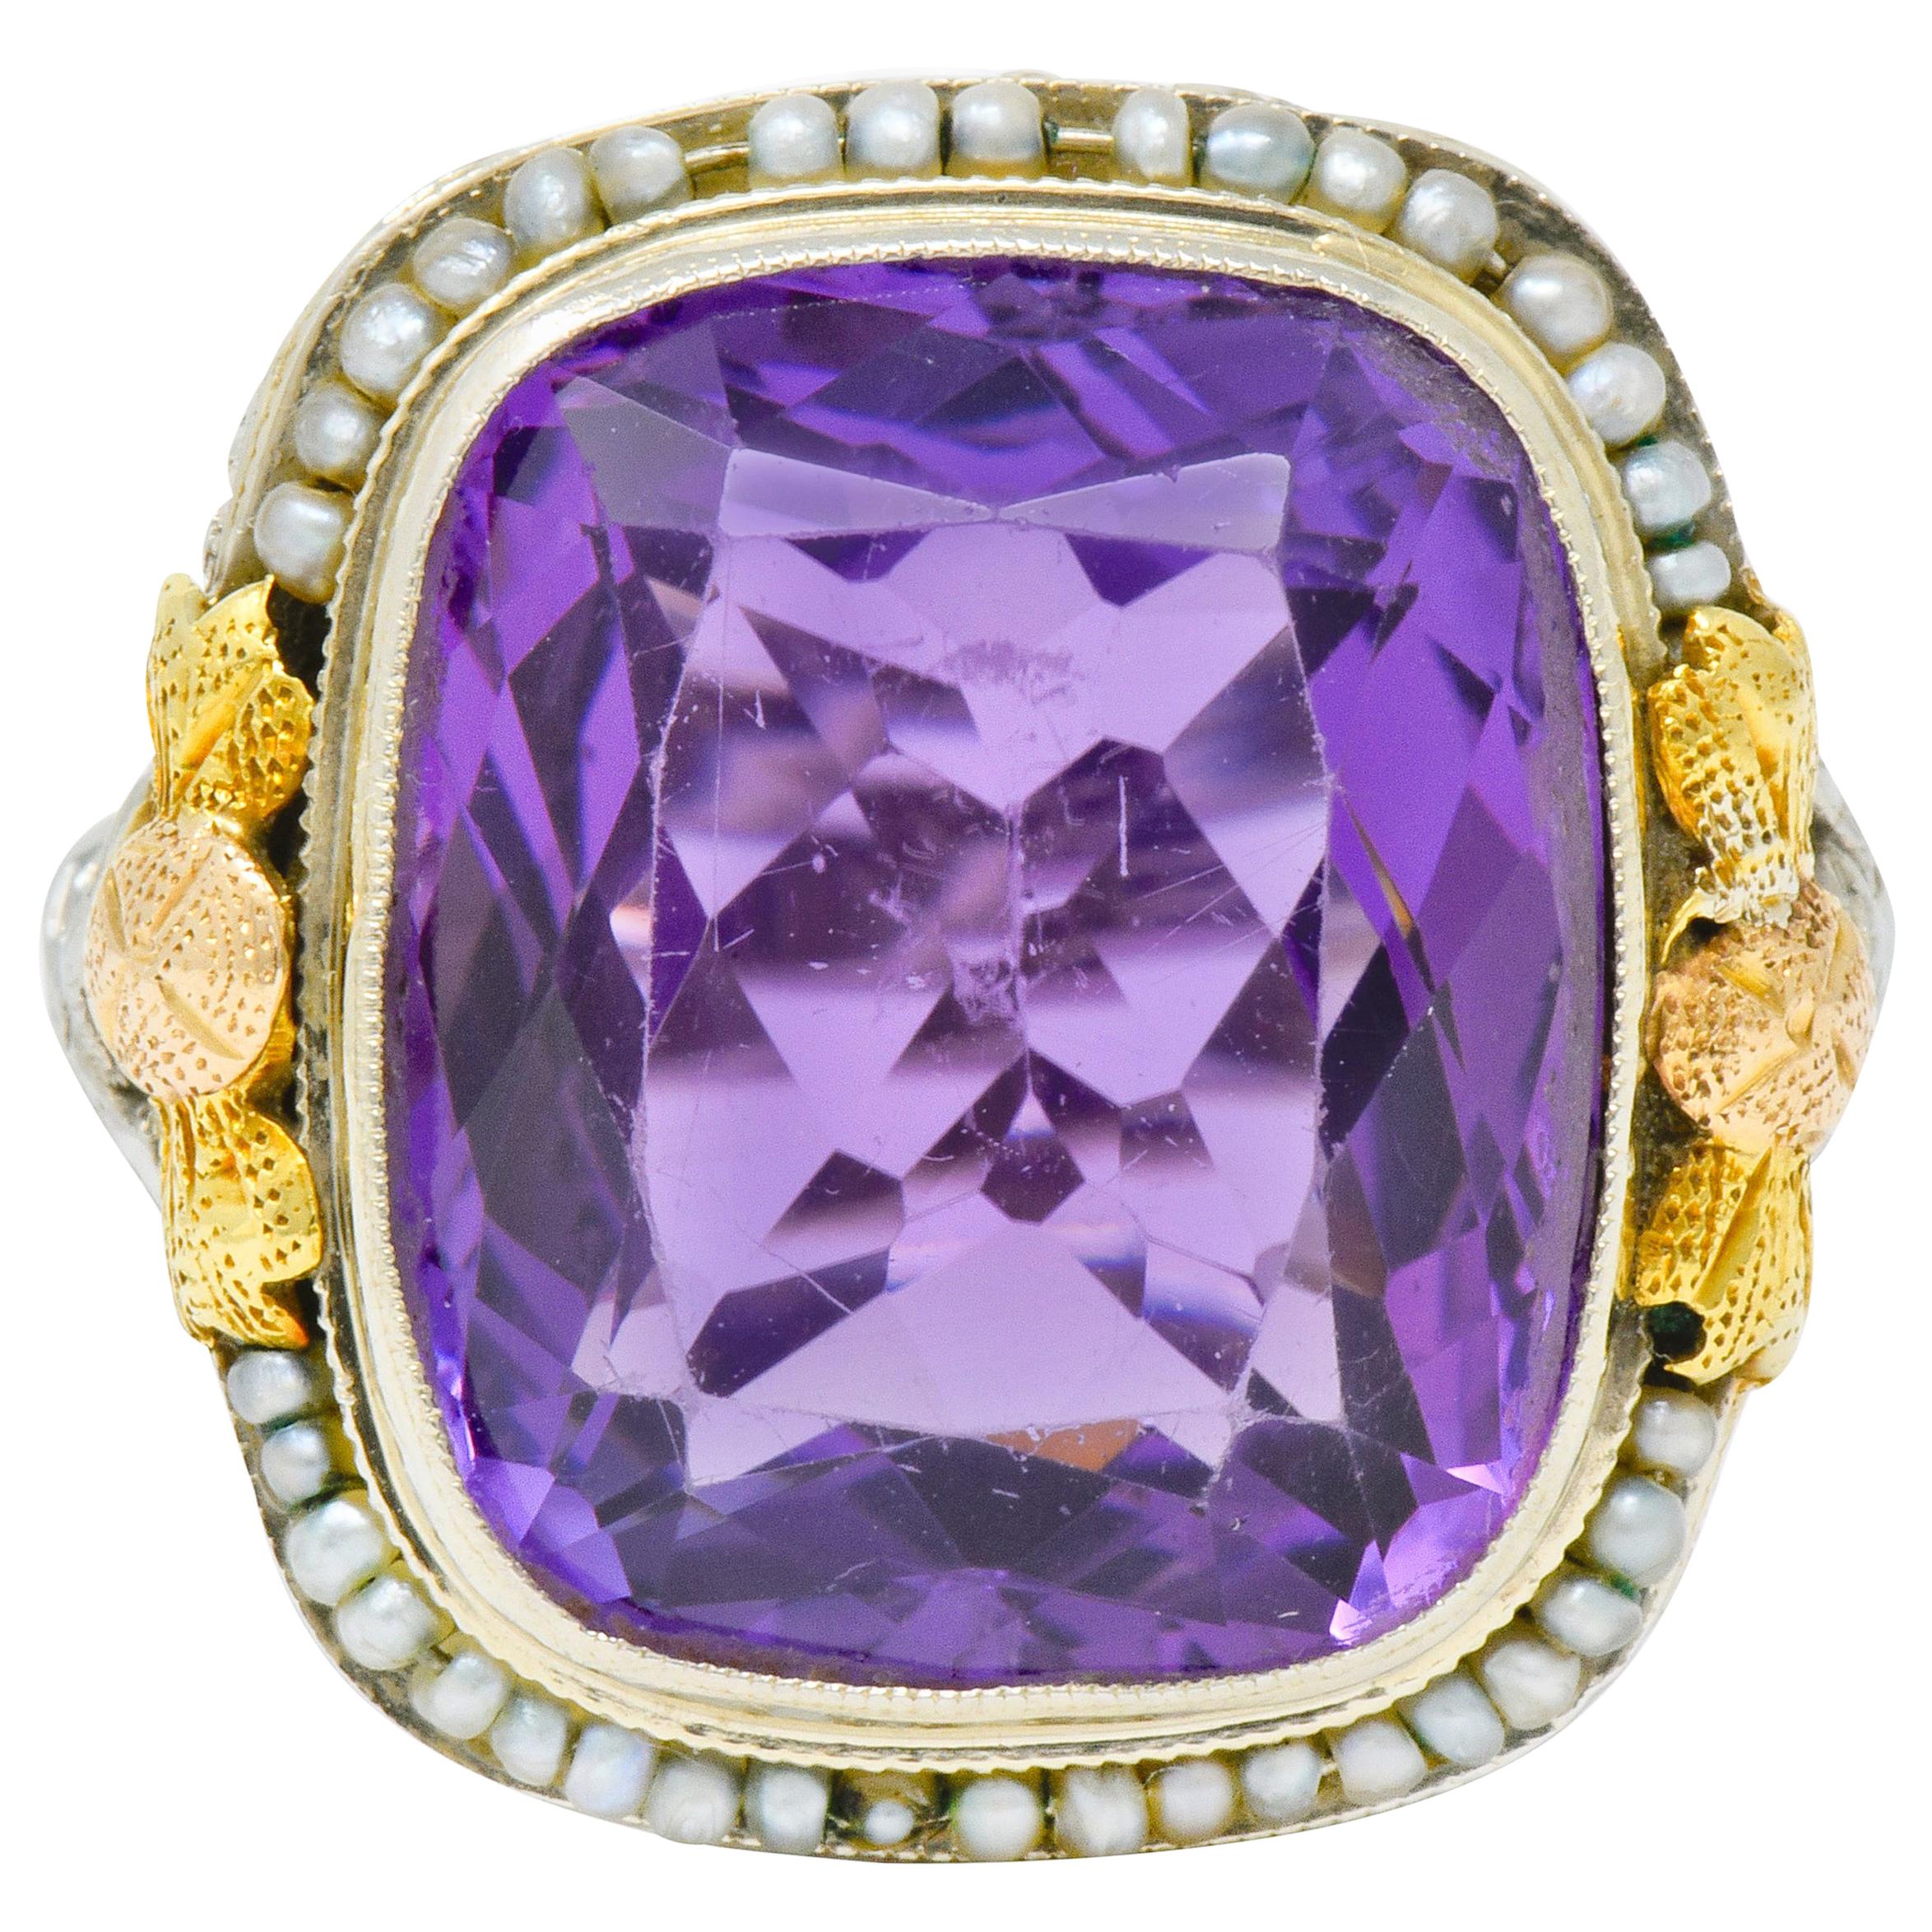 Bassett Jewelry Co. Art Deco 13.34 Carat Amethyst Natural Pearl 18K Gold Ring